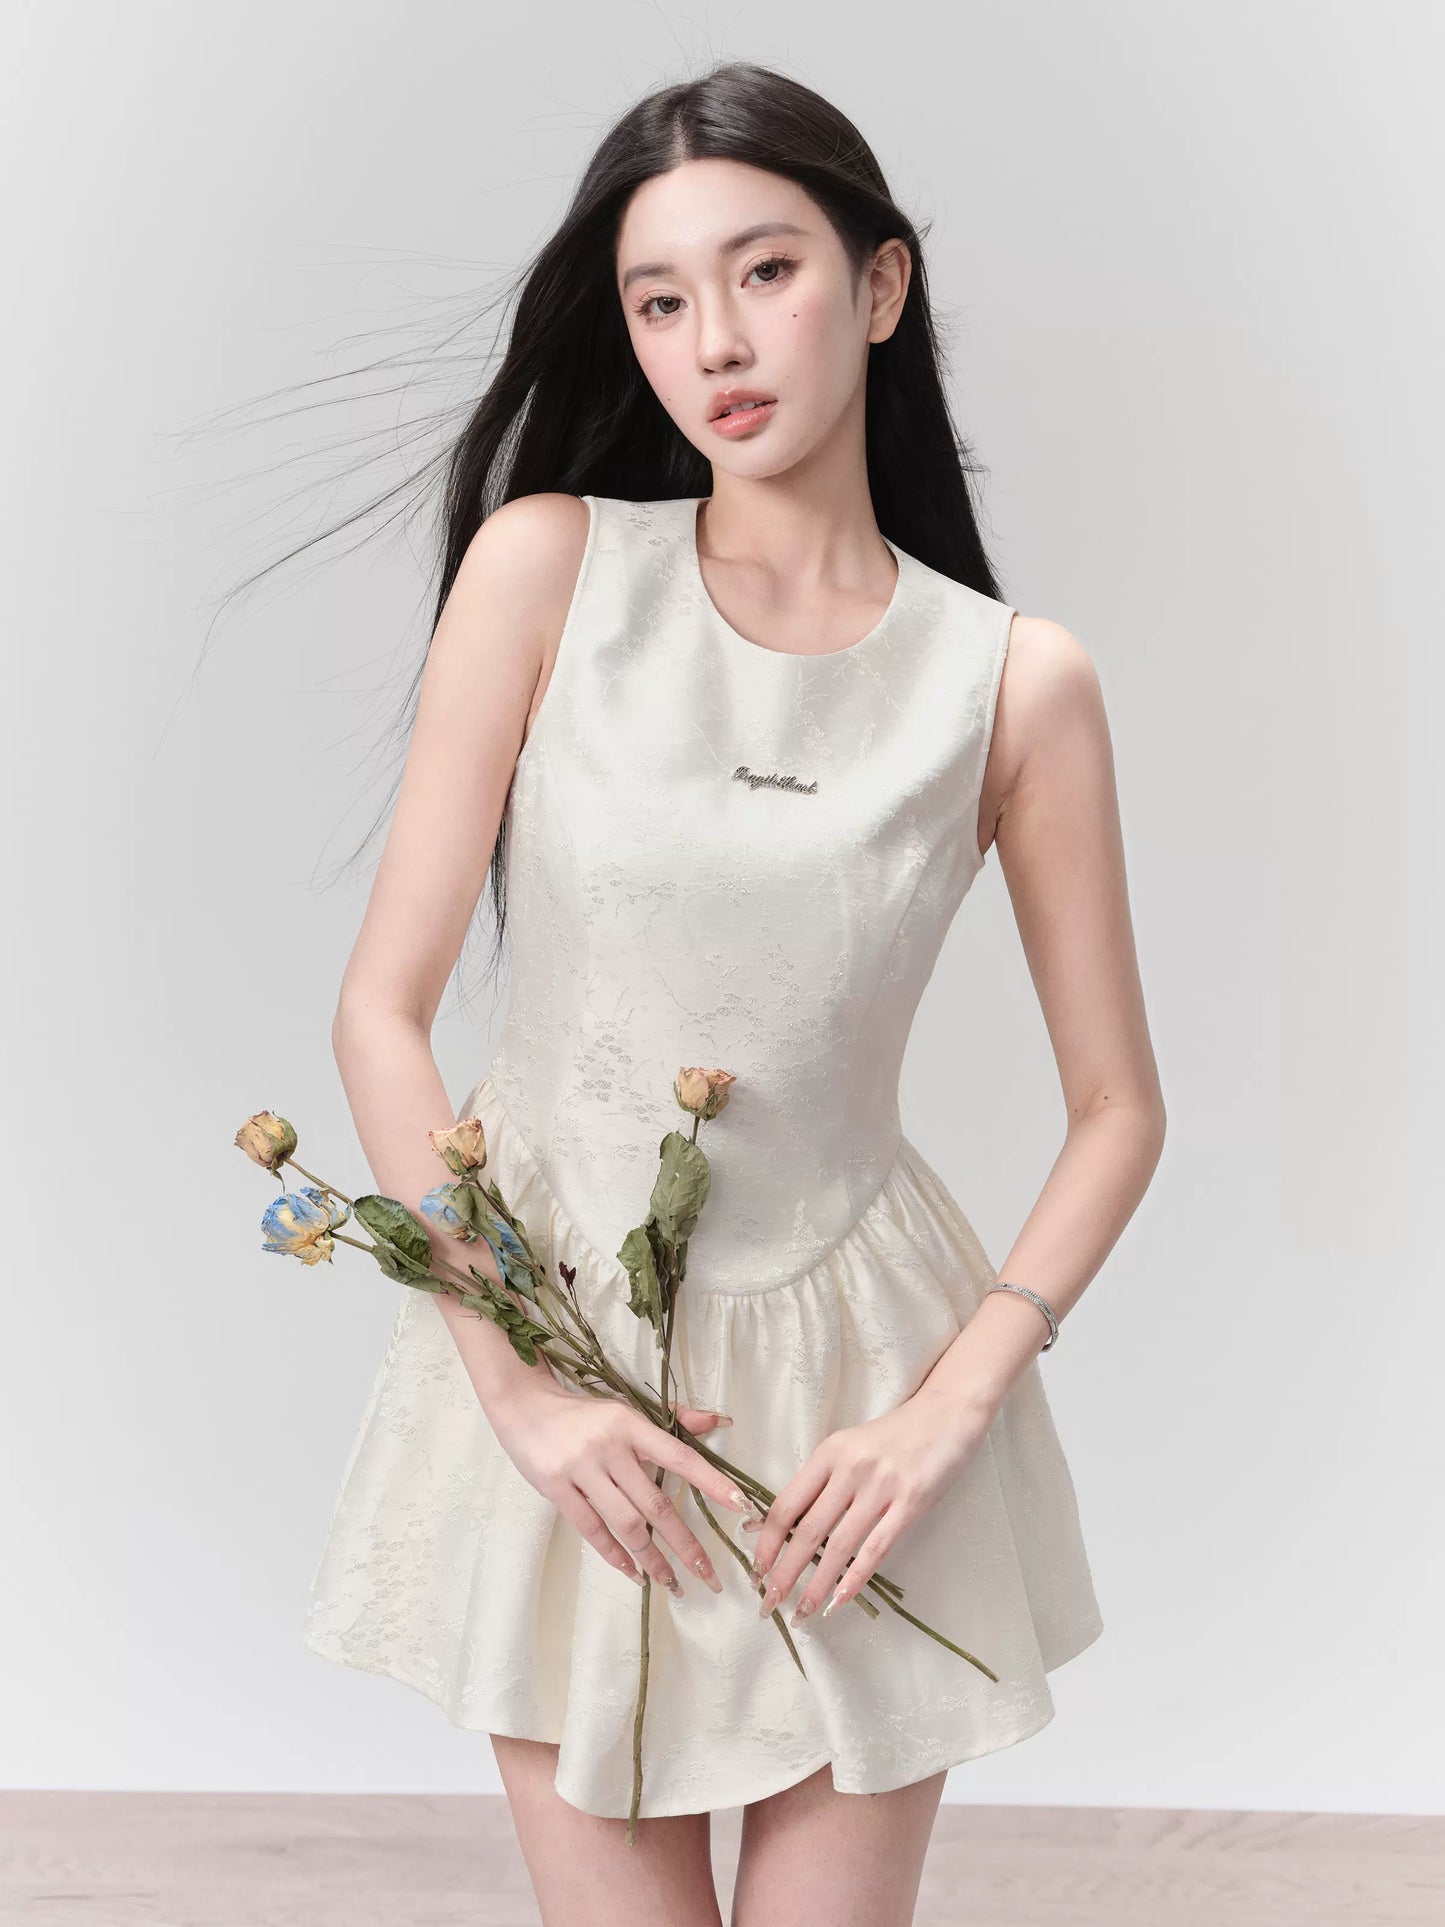 [Spot] Fragile Shop Princess Diary Daughter Wind Jacquard Vest Skirt Delicate Dating Dress